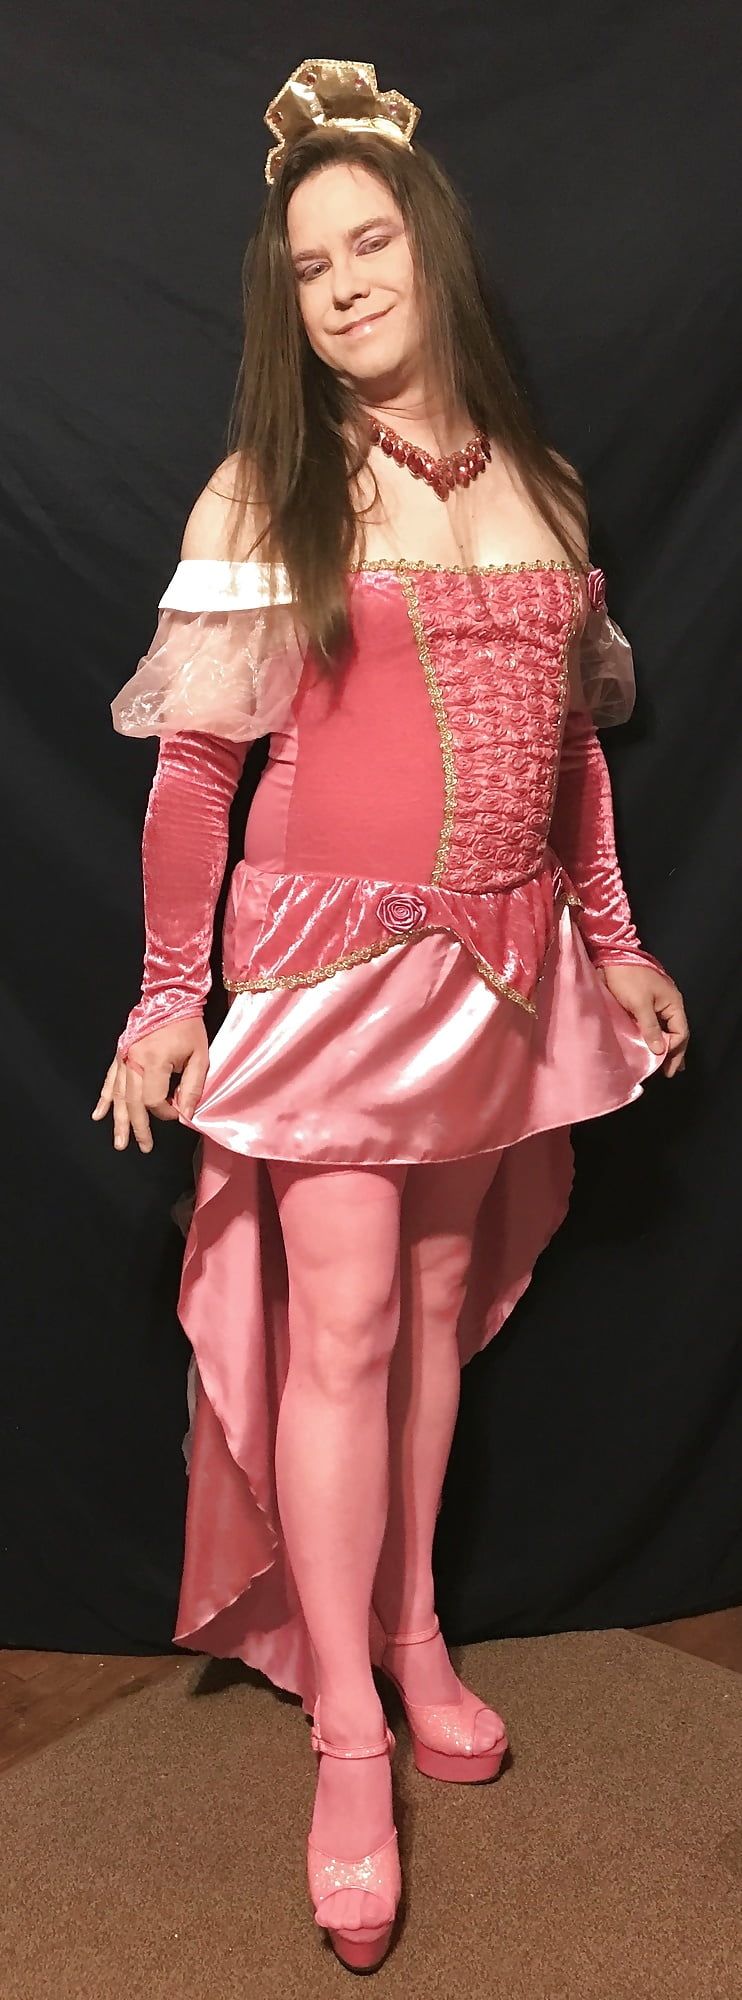 Joanie - Pink Princess #4